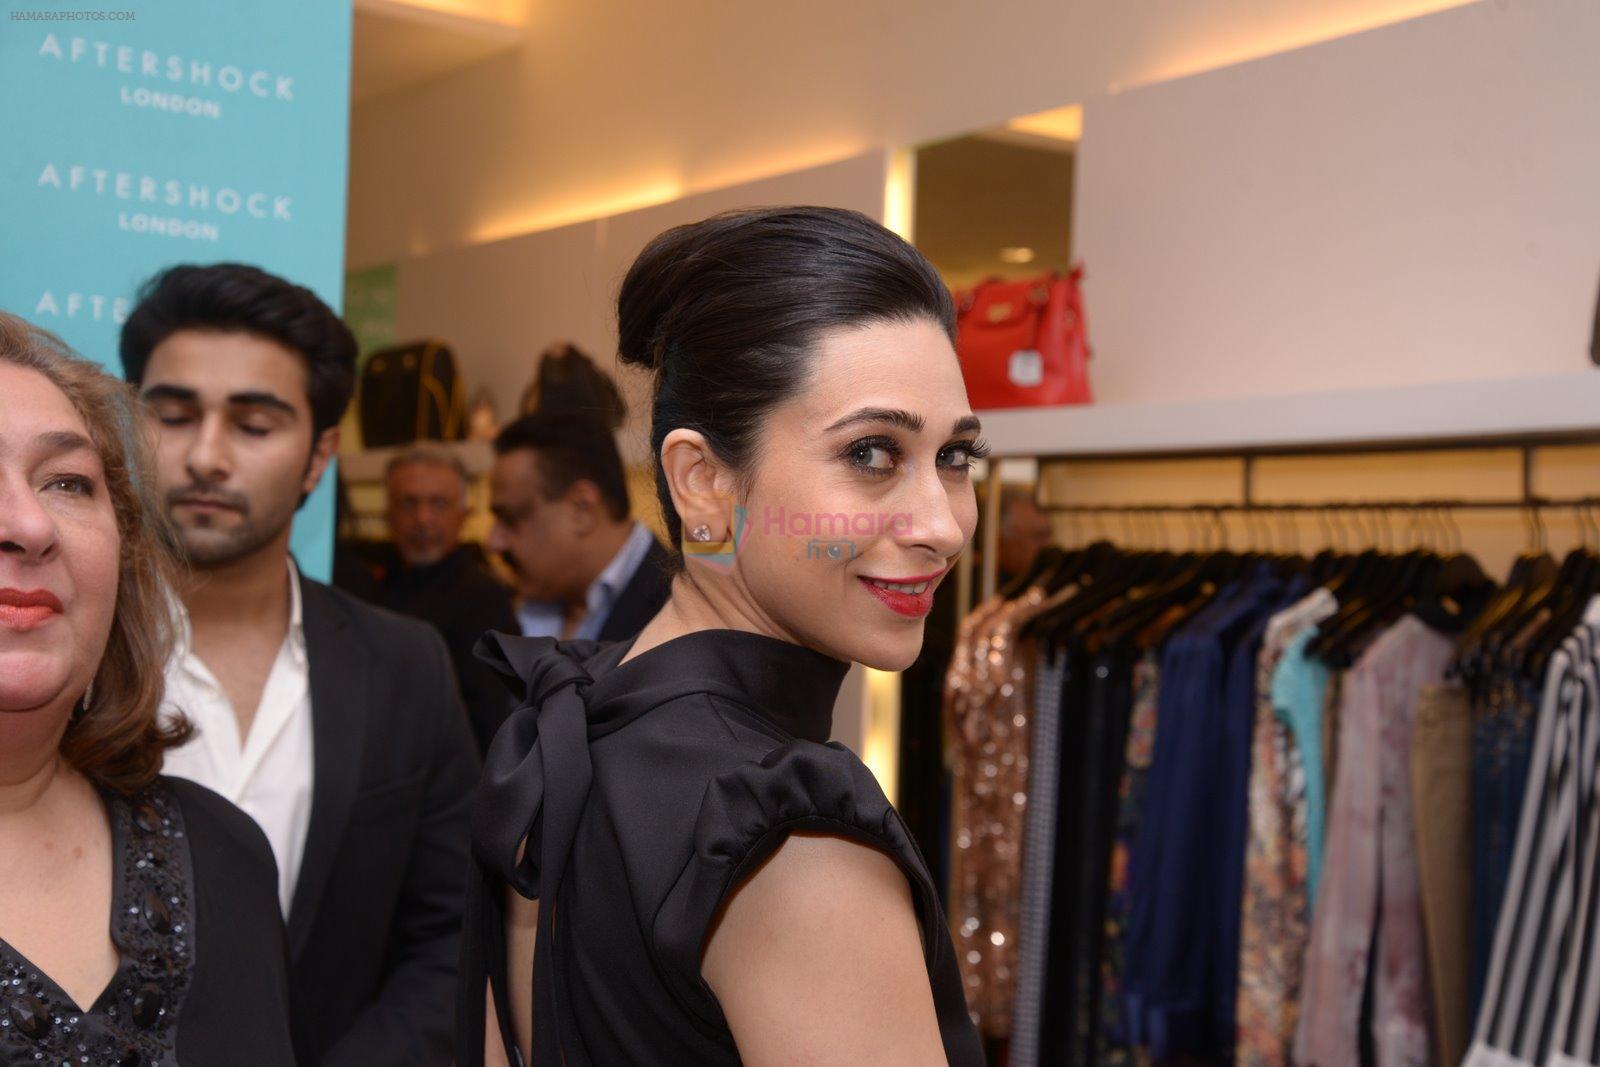 Karisma Kapoor at Reema Jain's After Shock launch in Palladium, Mumbai on 22nd Dec 2014